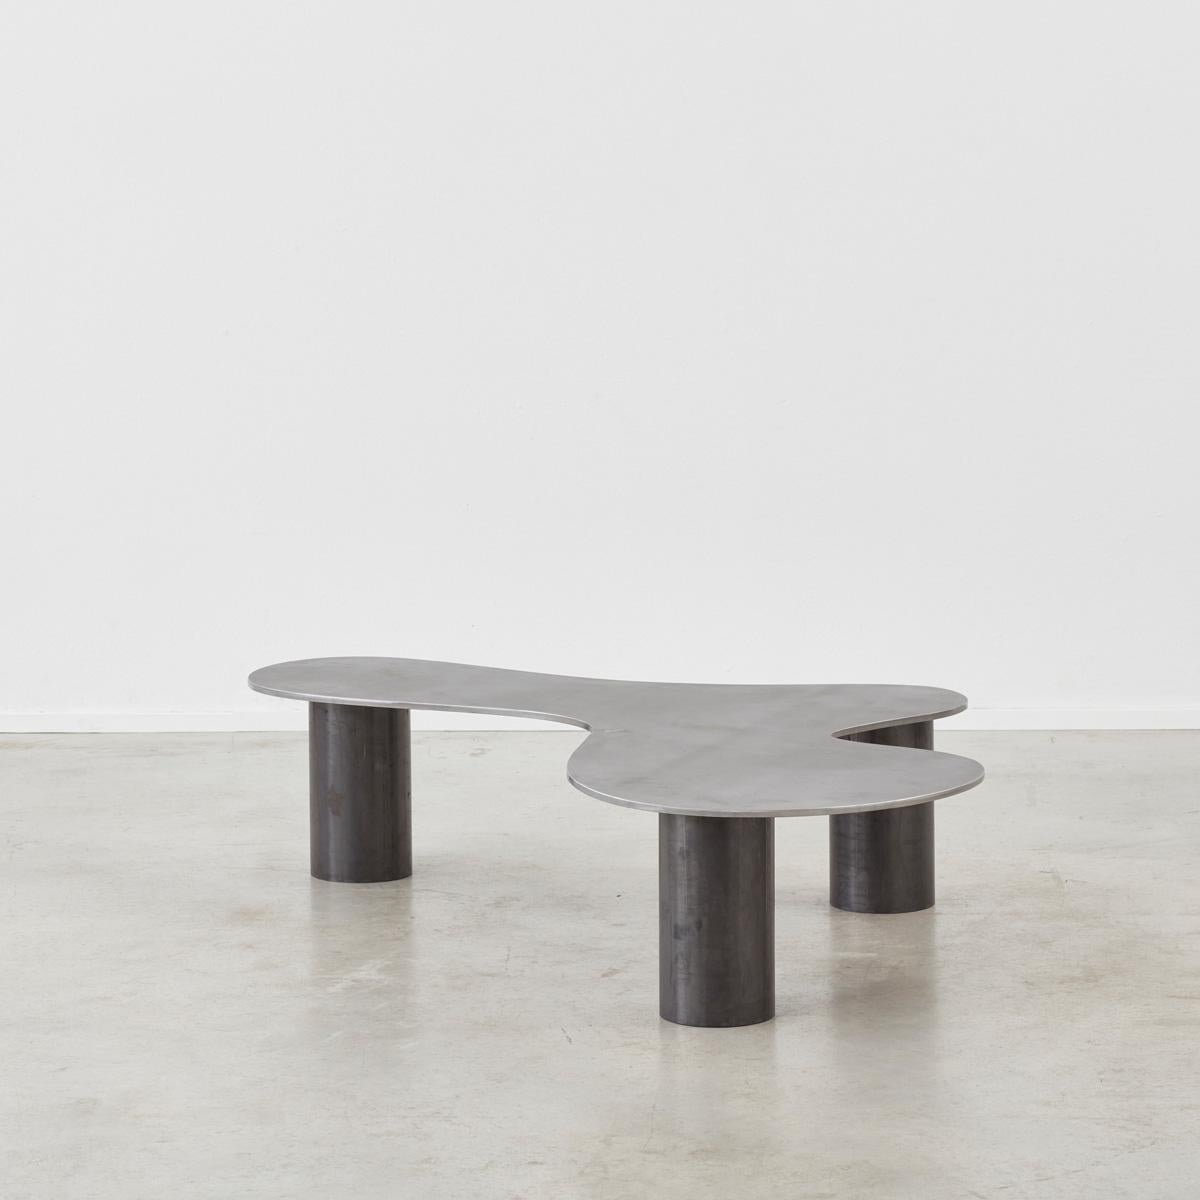 Postmoderne Table basse 001 par Archive for Space, Stoke-on-Trent, Royaume-Uni, 2021 en vente